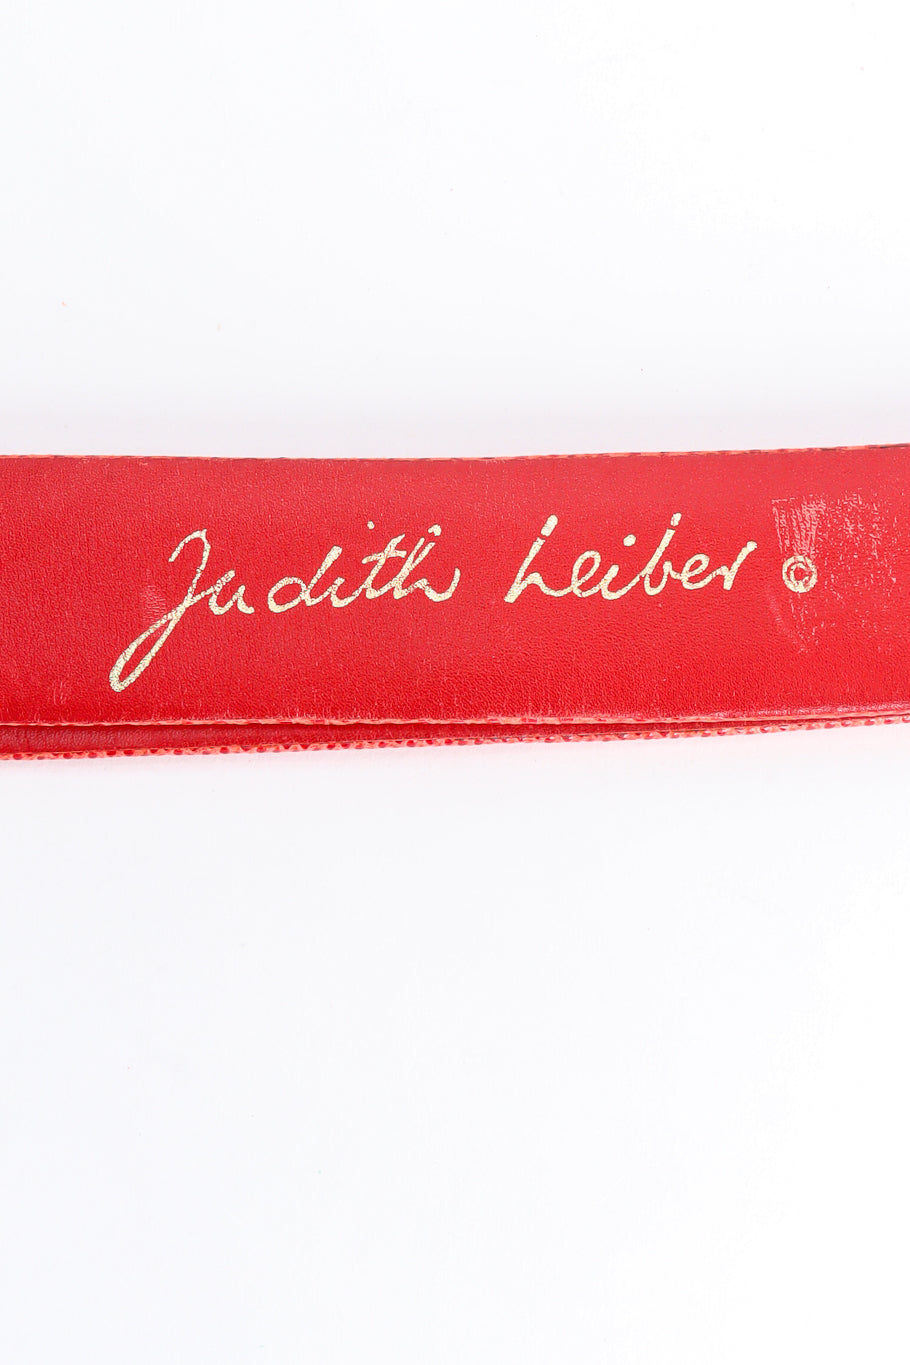 zig zag buckle slide belt by Judith Leiber signature @recessla